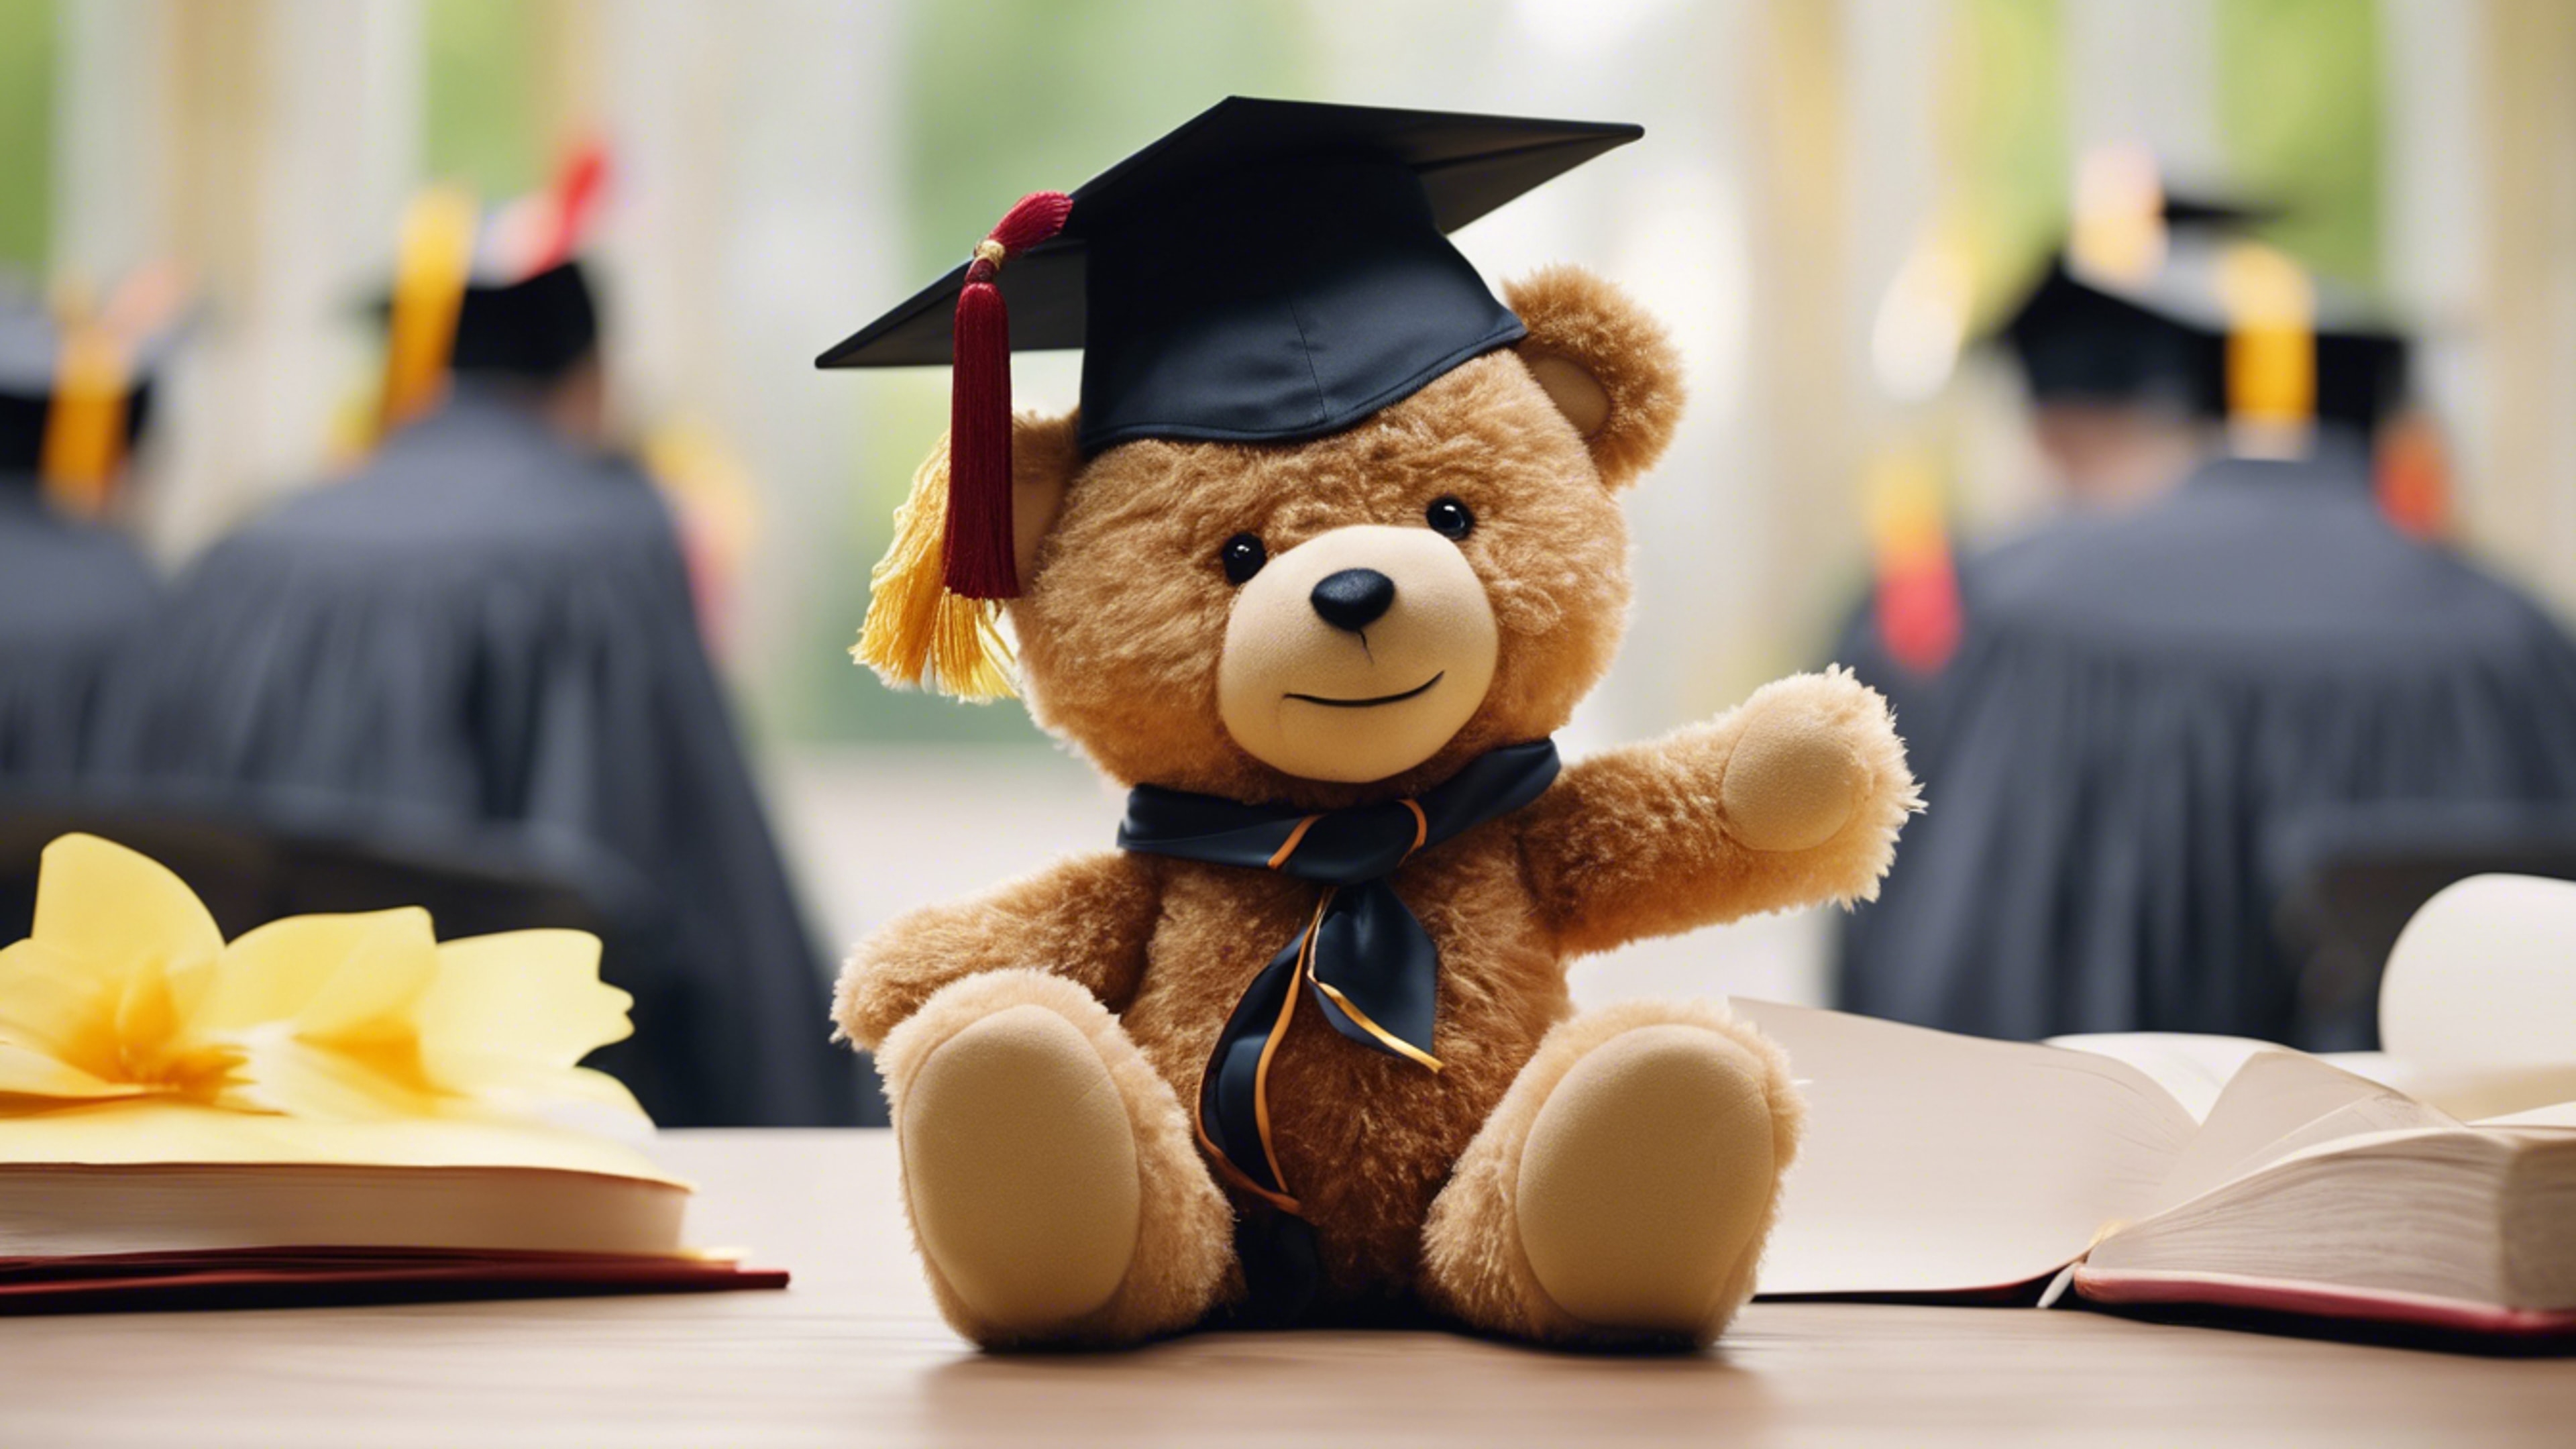 A teddy bear wearing graduation cap and diploma, amidst a graduation ceremony.壁紙[88eefa047aa0490a9f74]